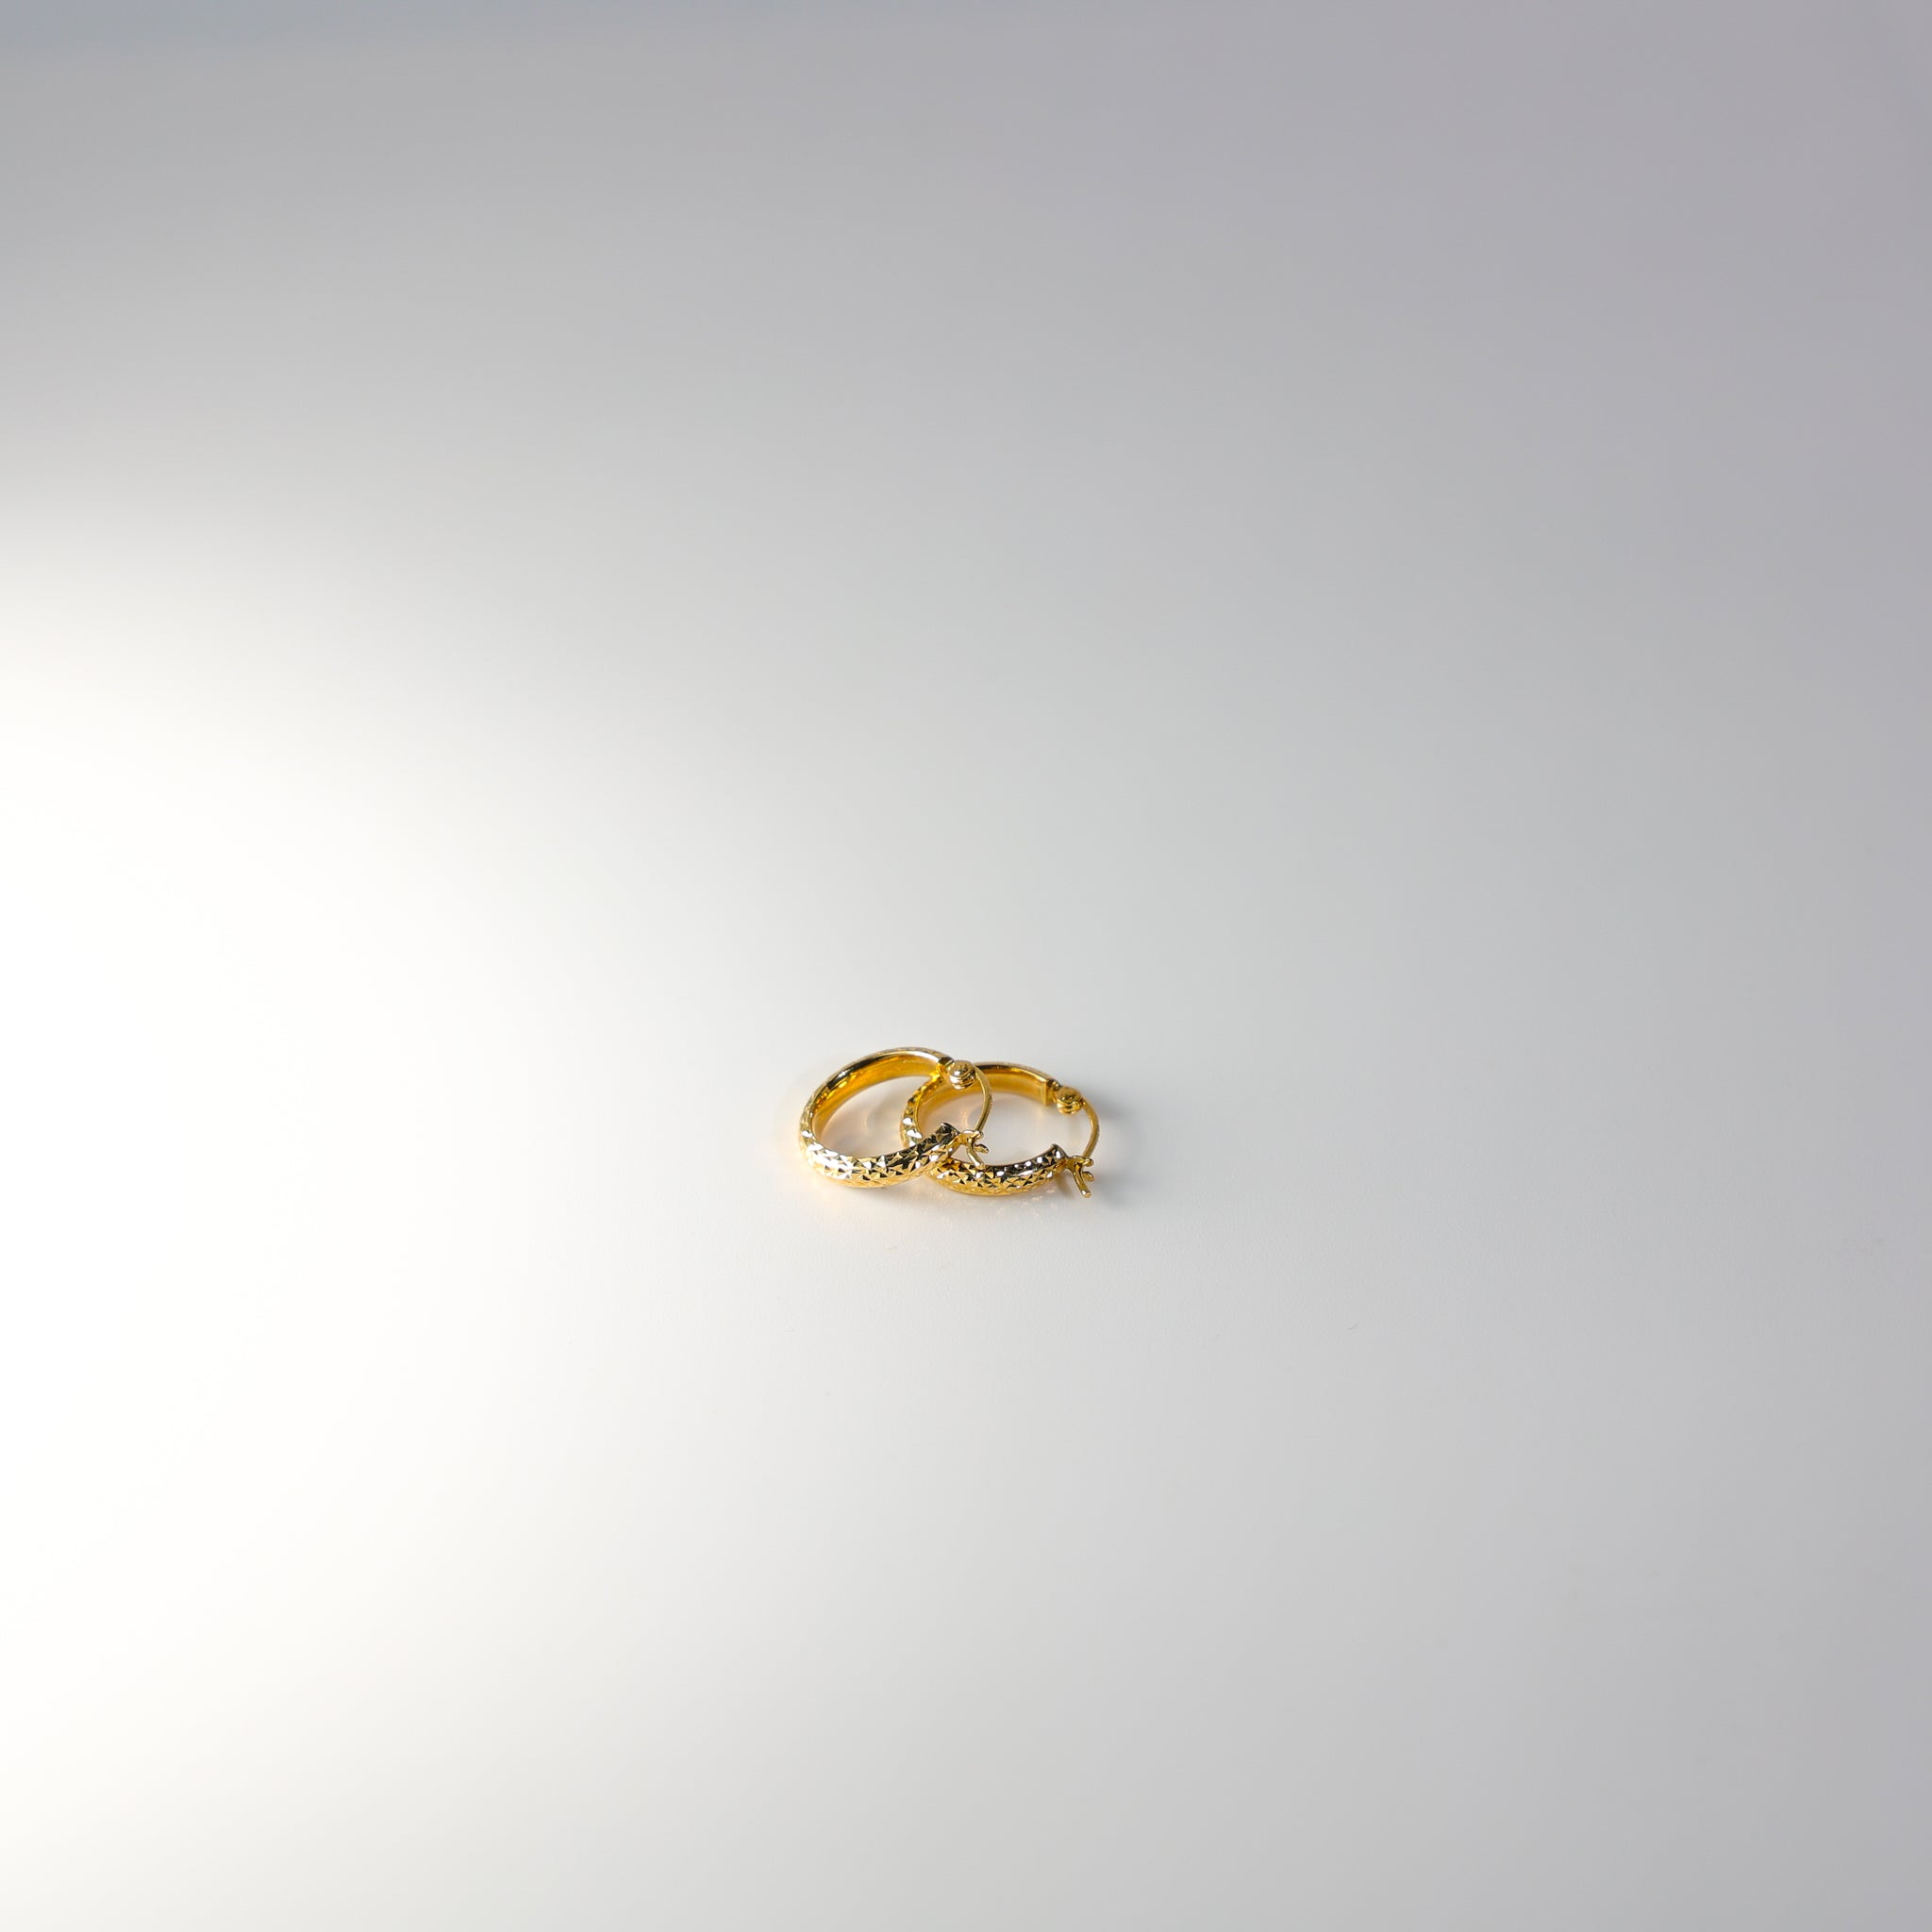 Gold Huggie Hoop Earrings Diamond Cut 15MM Wide Model-0074 - Charlie & Co. Jewelry